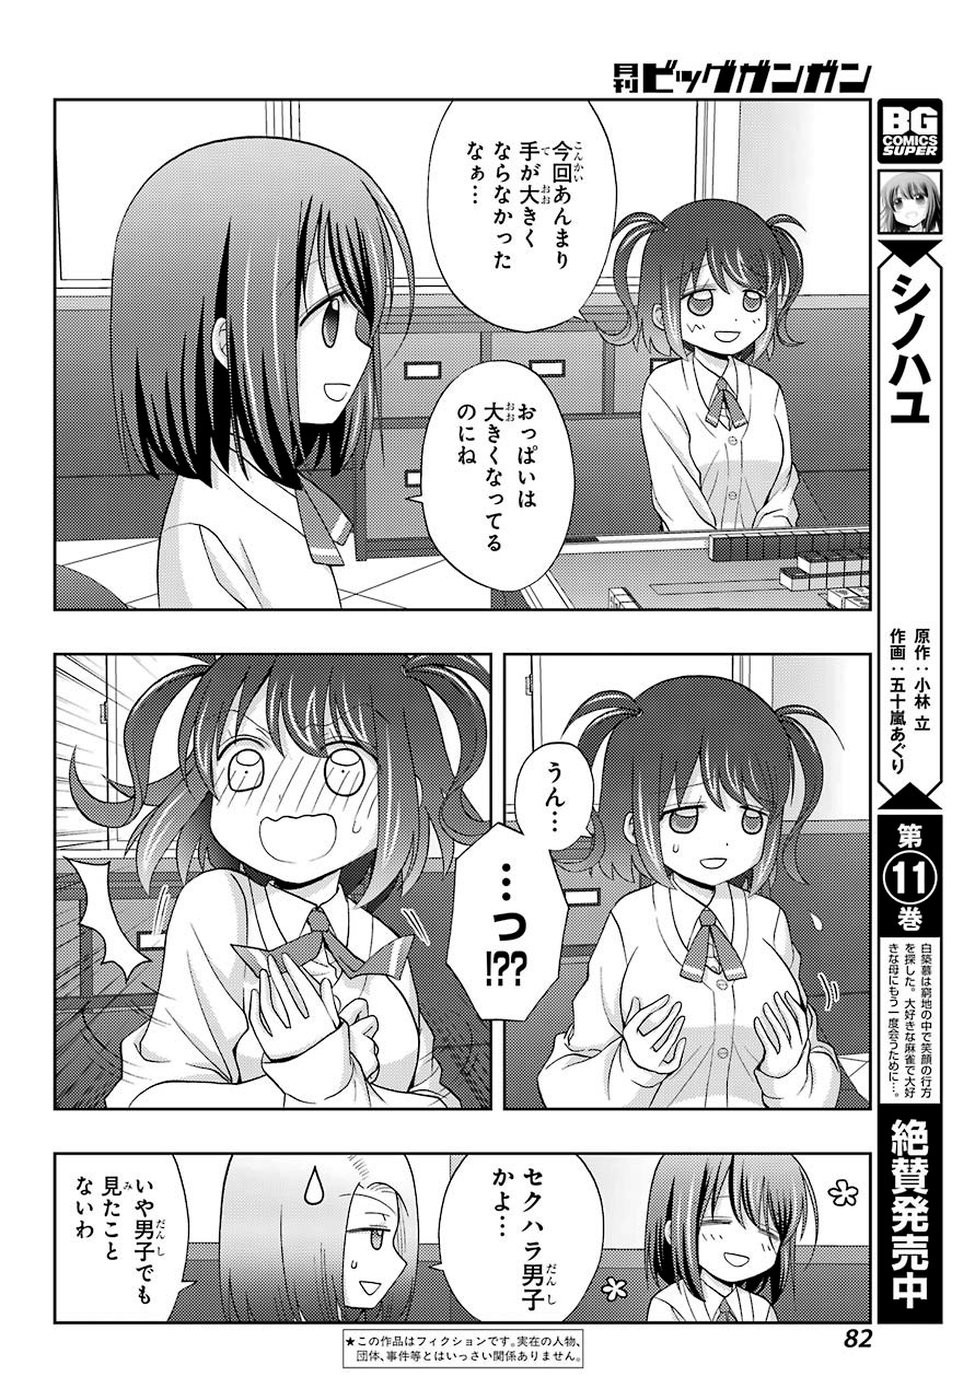 Shinohayu - The Dawn of Age Manga - Chapter 072 - Page 4